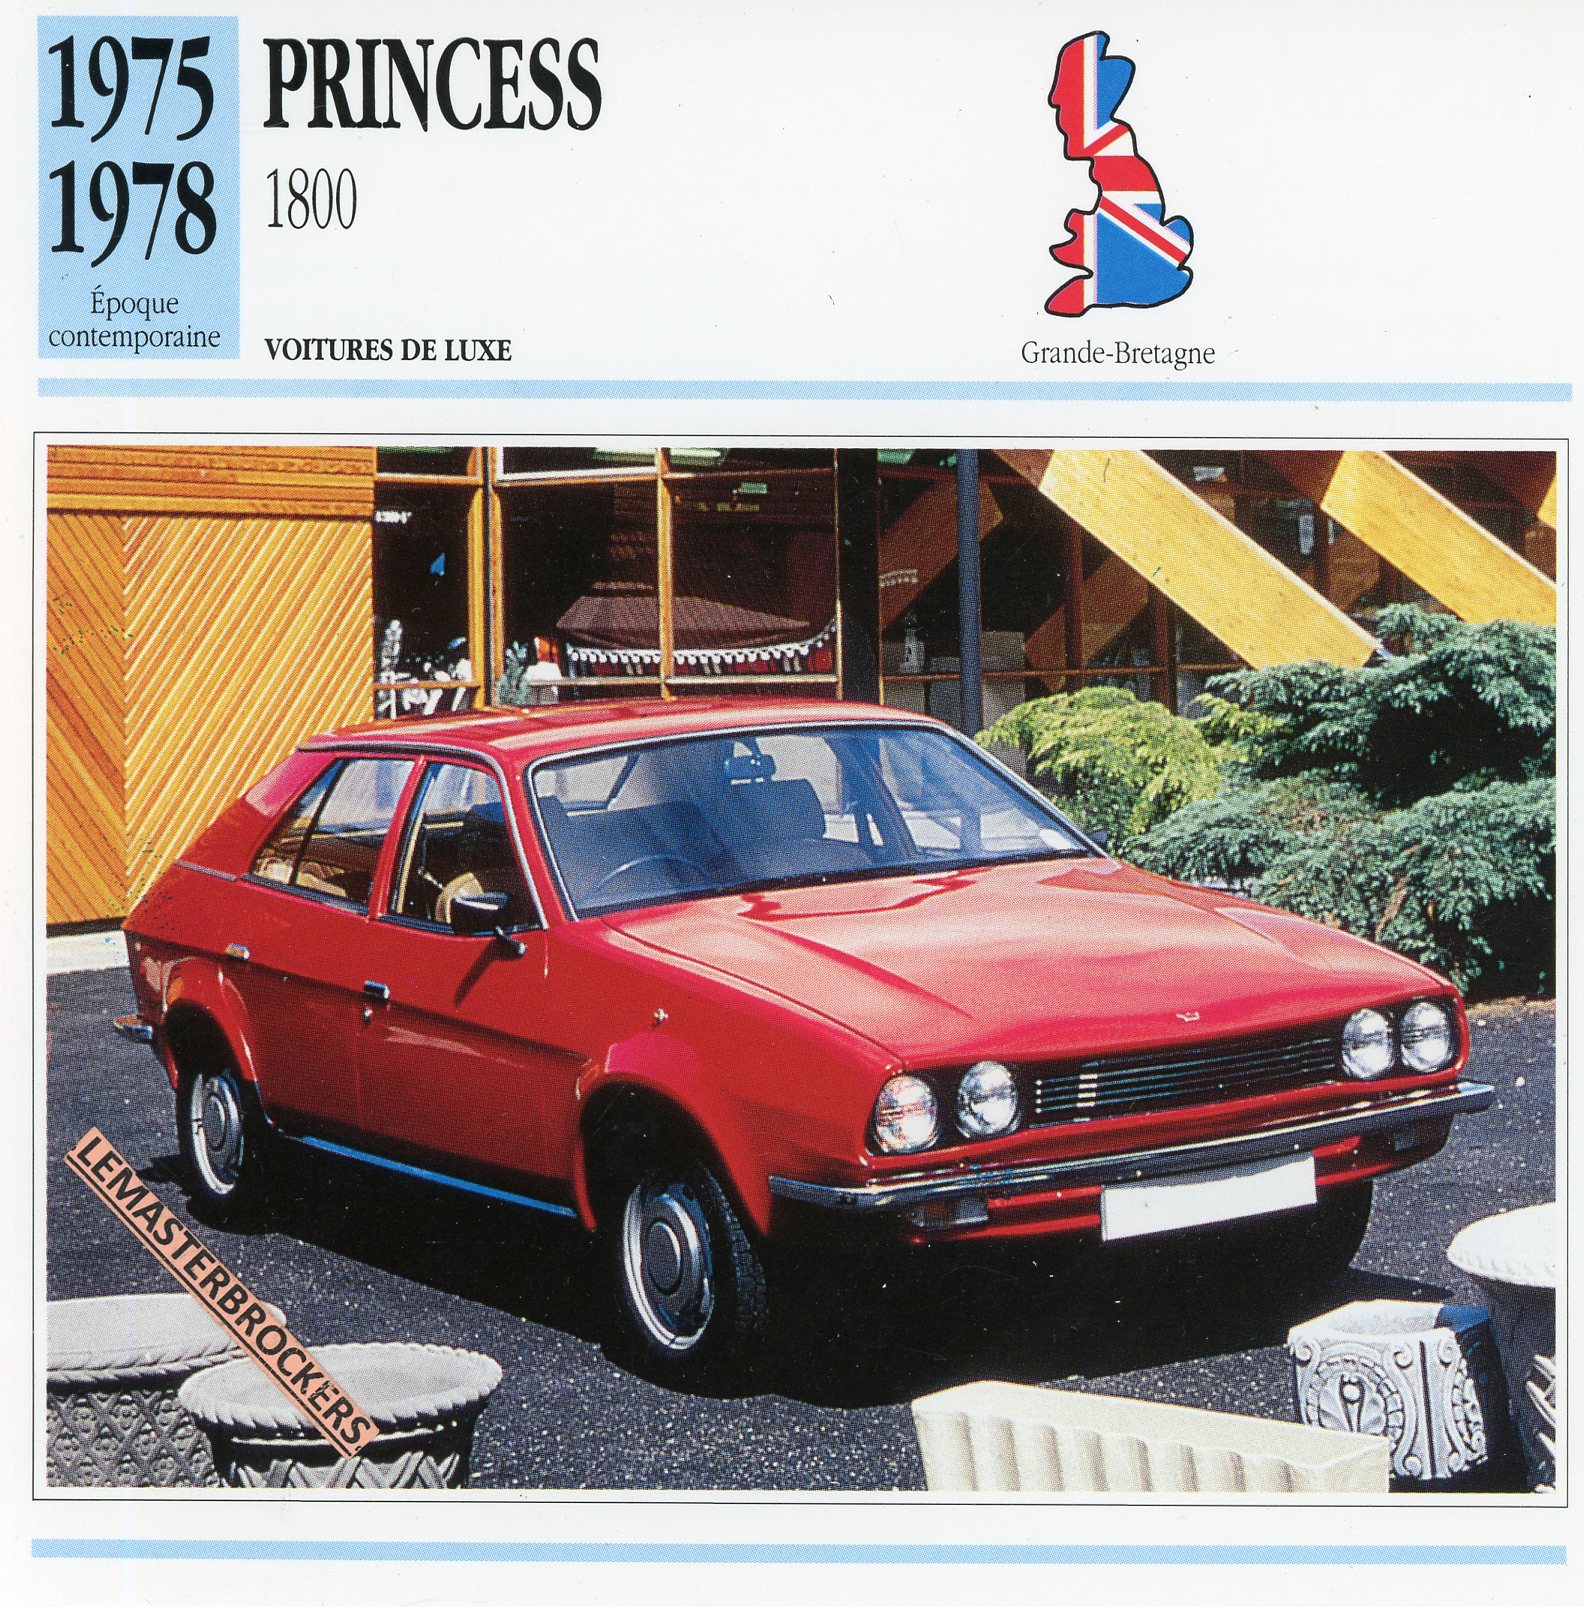 PRINCESS 1800 1975 1978 - FICHE AUTO - CARD CARS ATLAS FRENCH